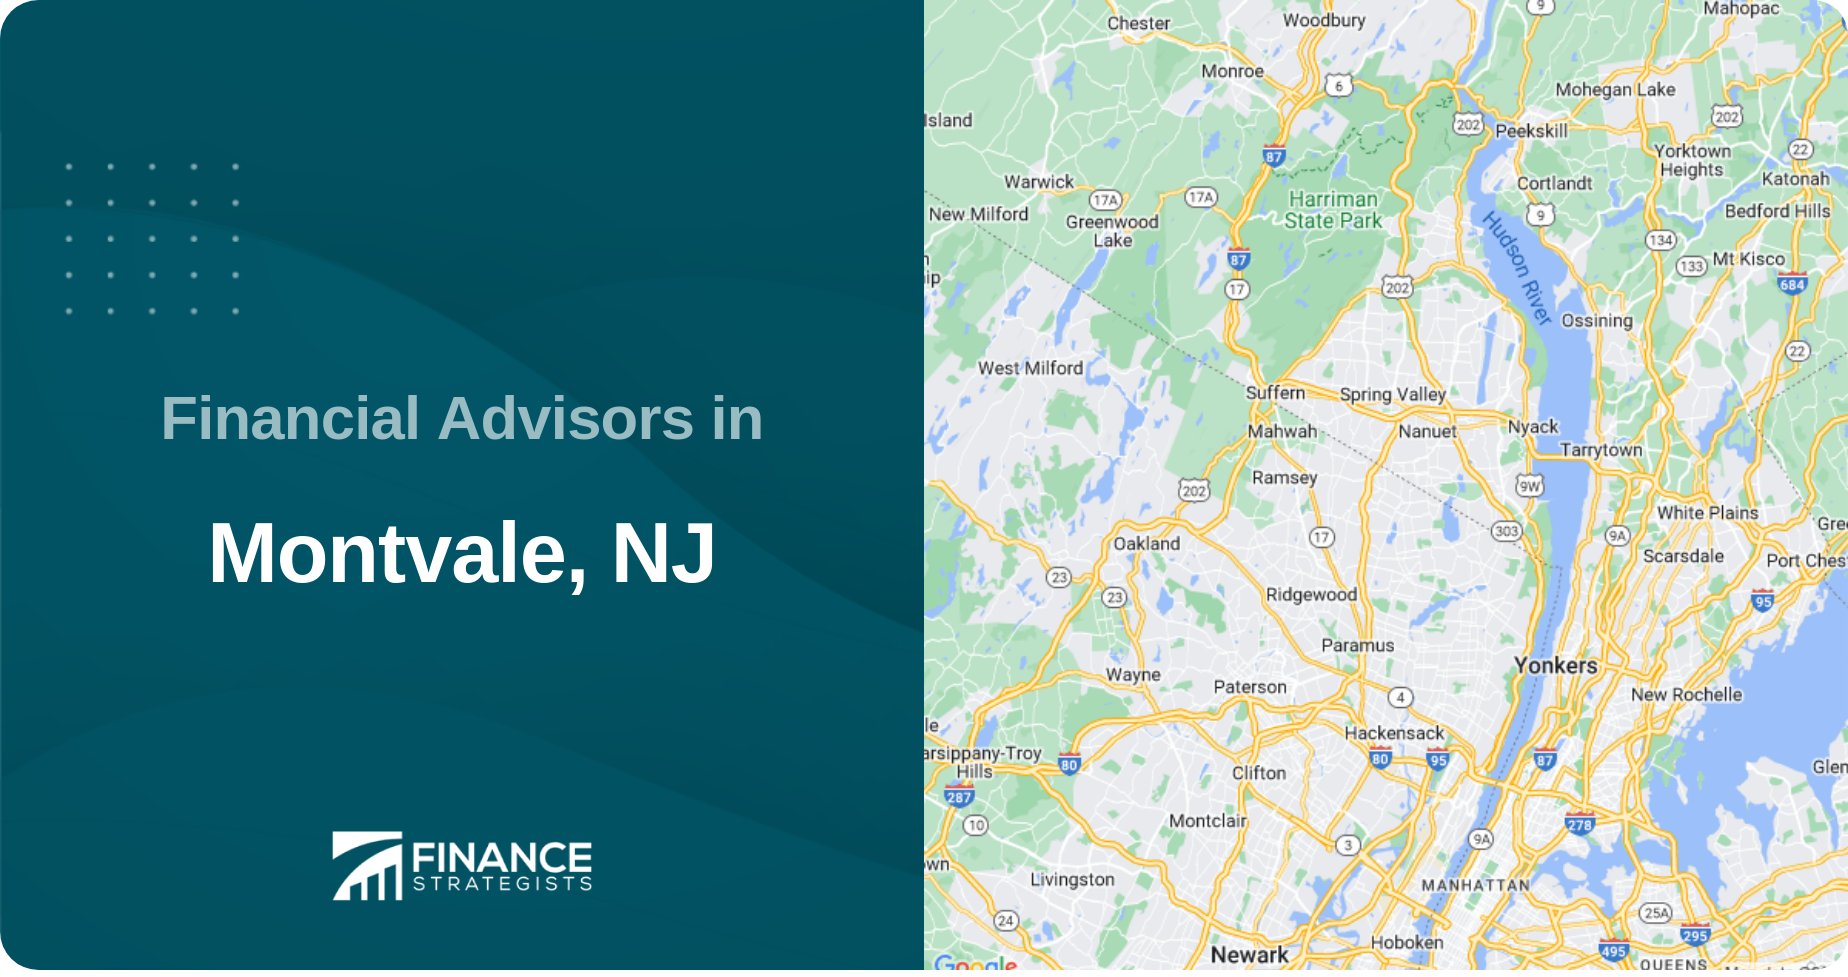 Financial Advisors in Montvale, NJ